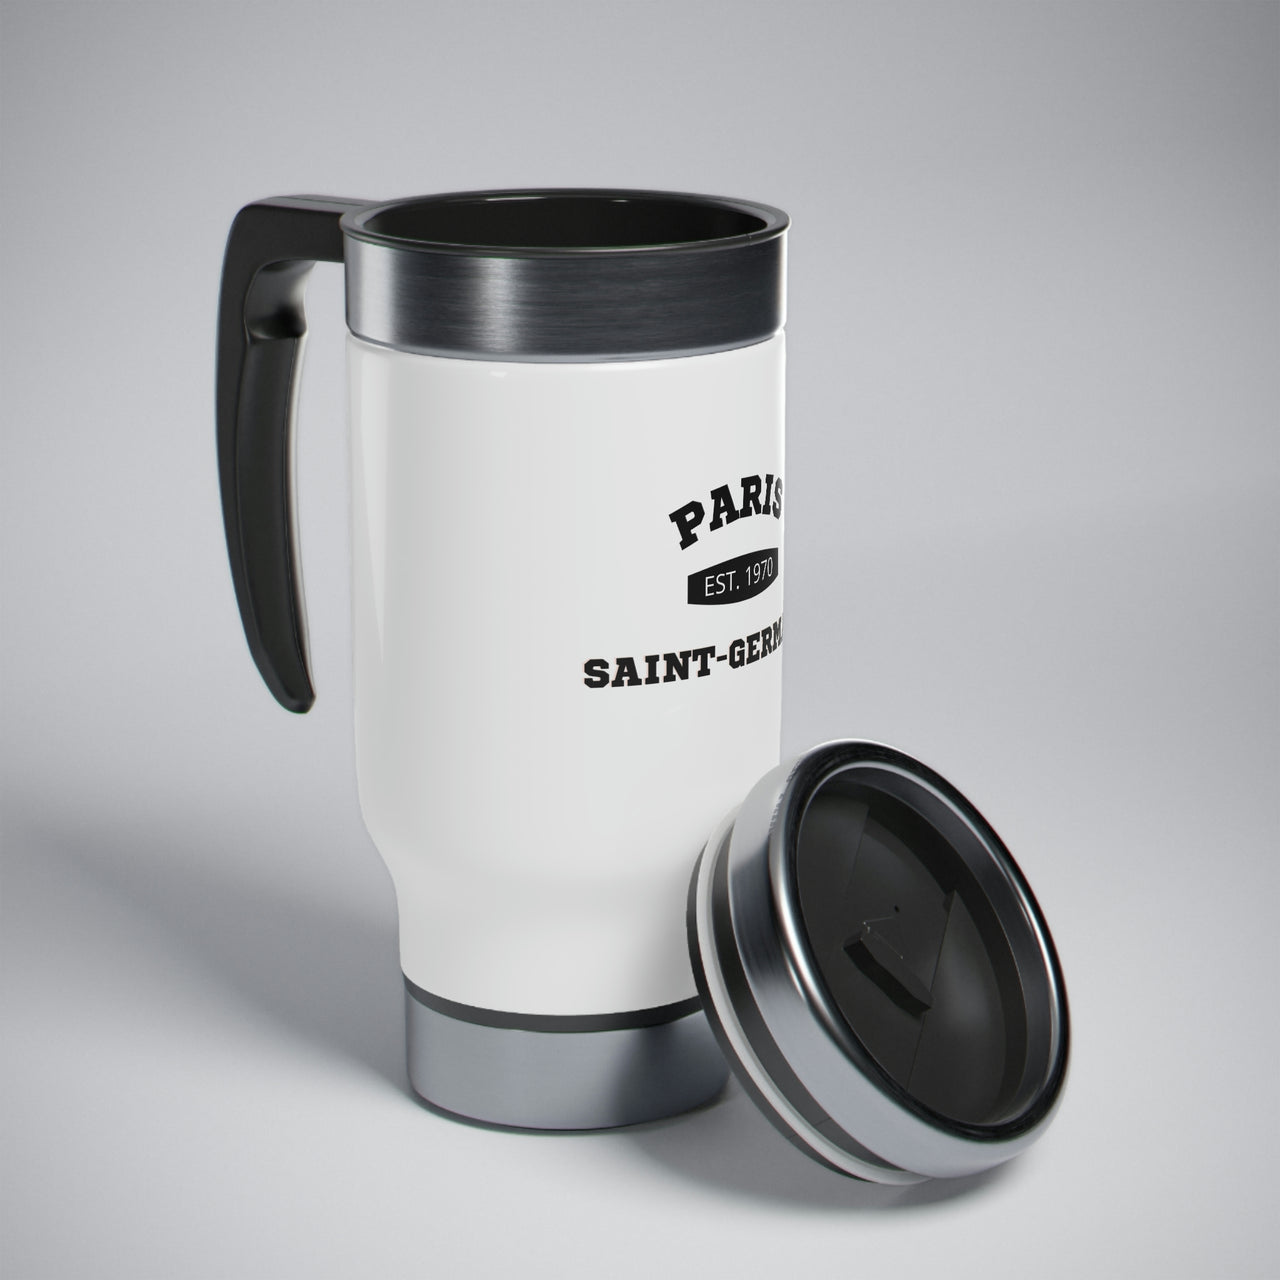 PSG Stainless Steel Travel Mug with Handle, 14oz